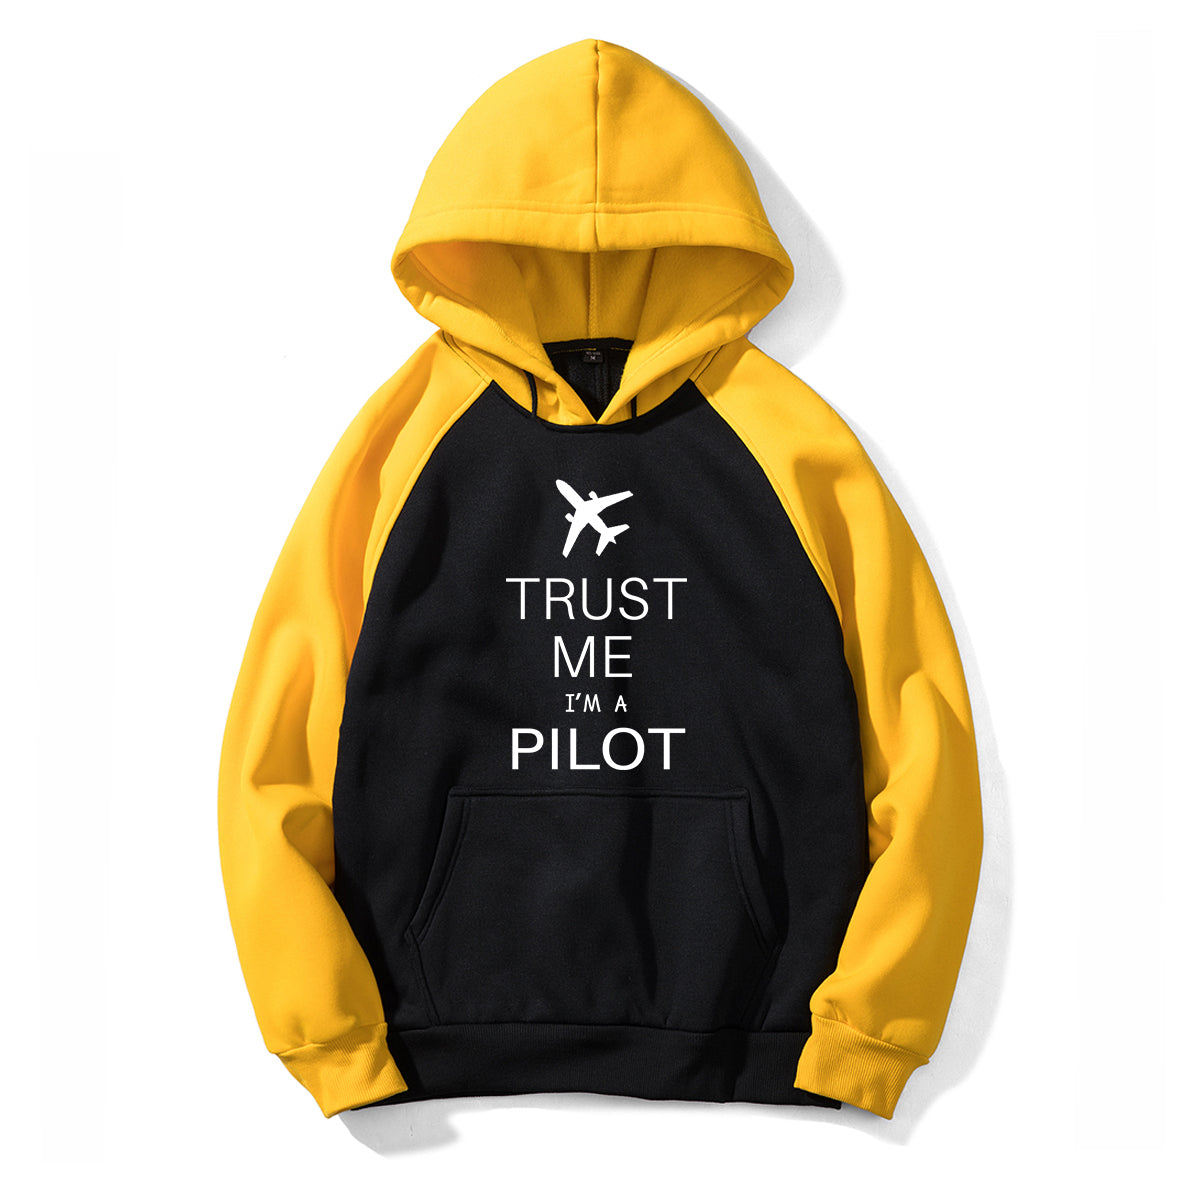 Trust Me I'm a Pilot 2 Designed Colourful Hoodies